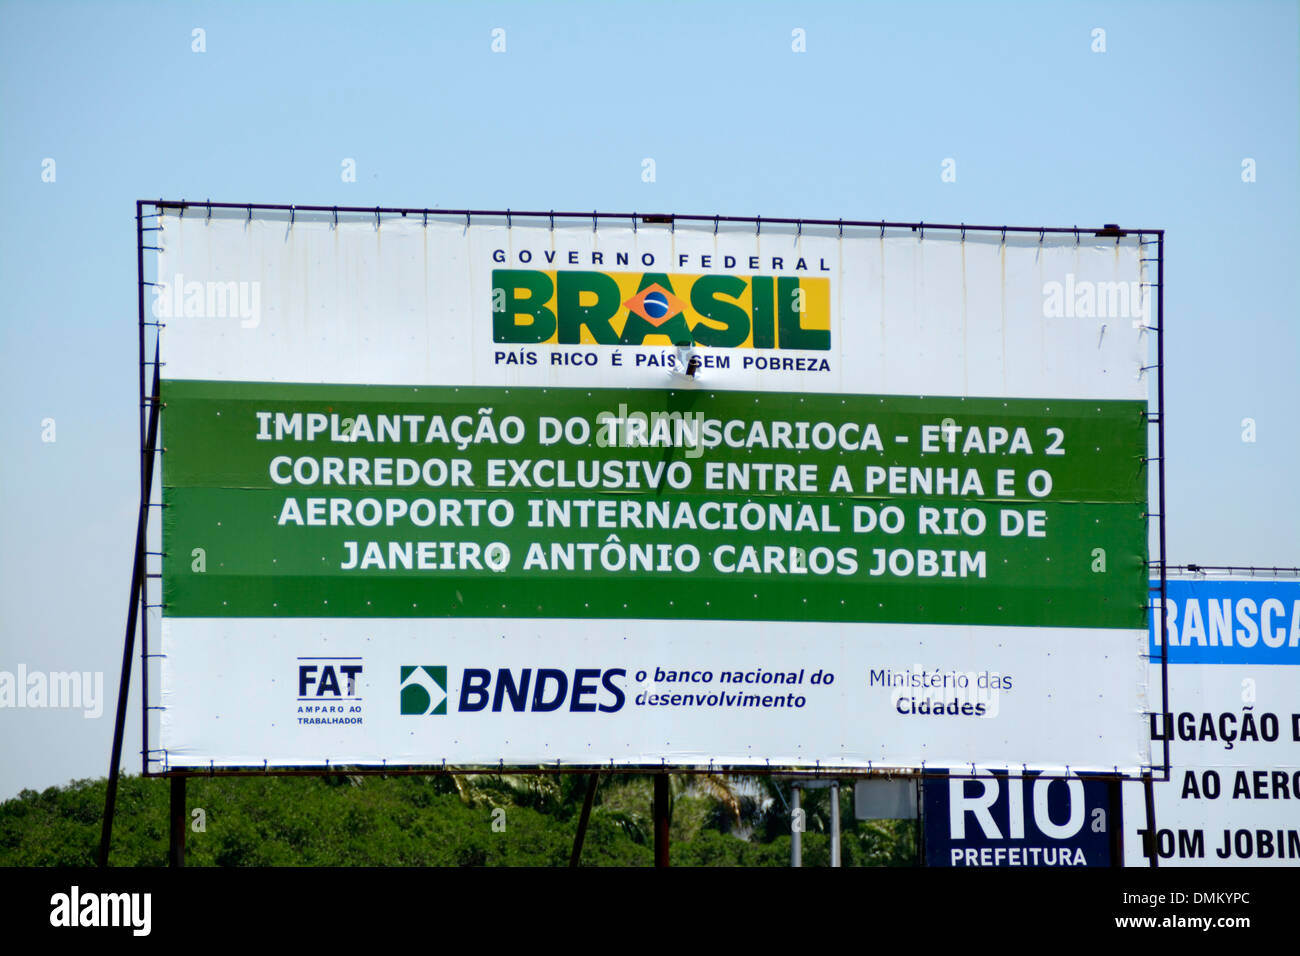 Billboard Brasil - Abril de 2011 by Billboard Brasil - Issuu